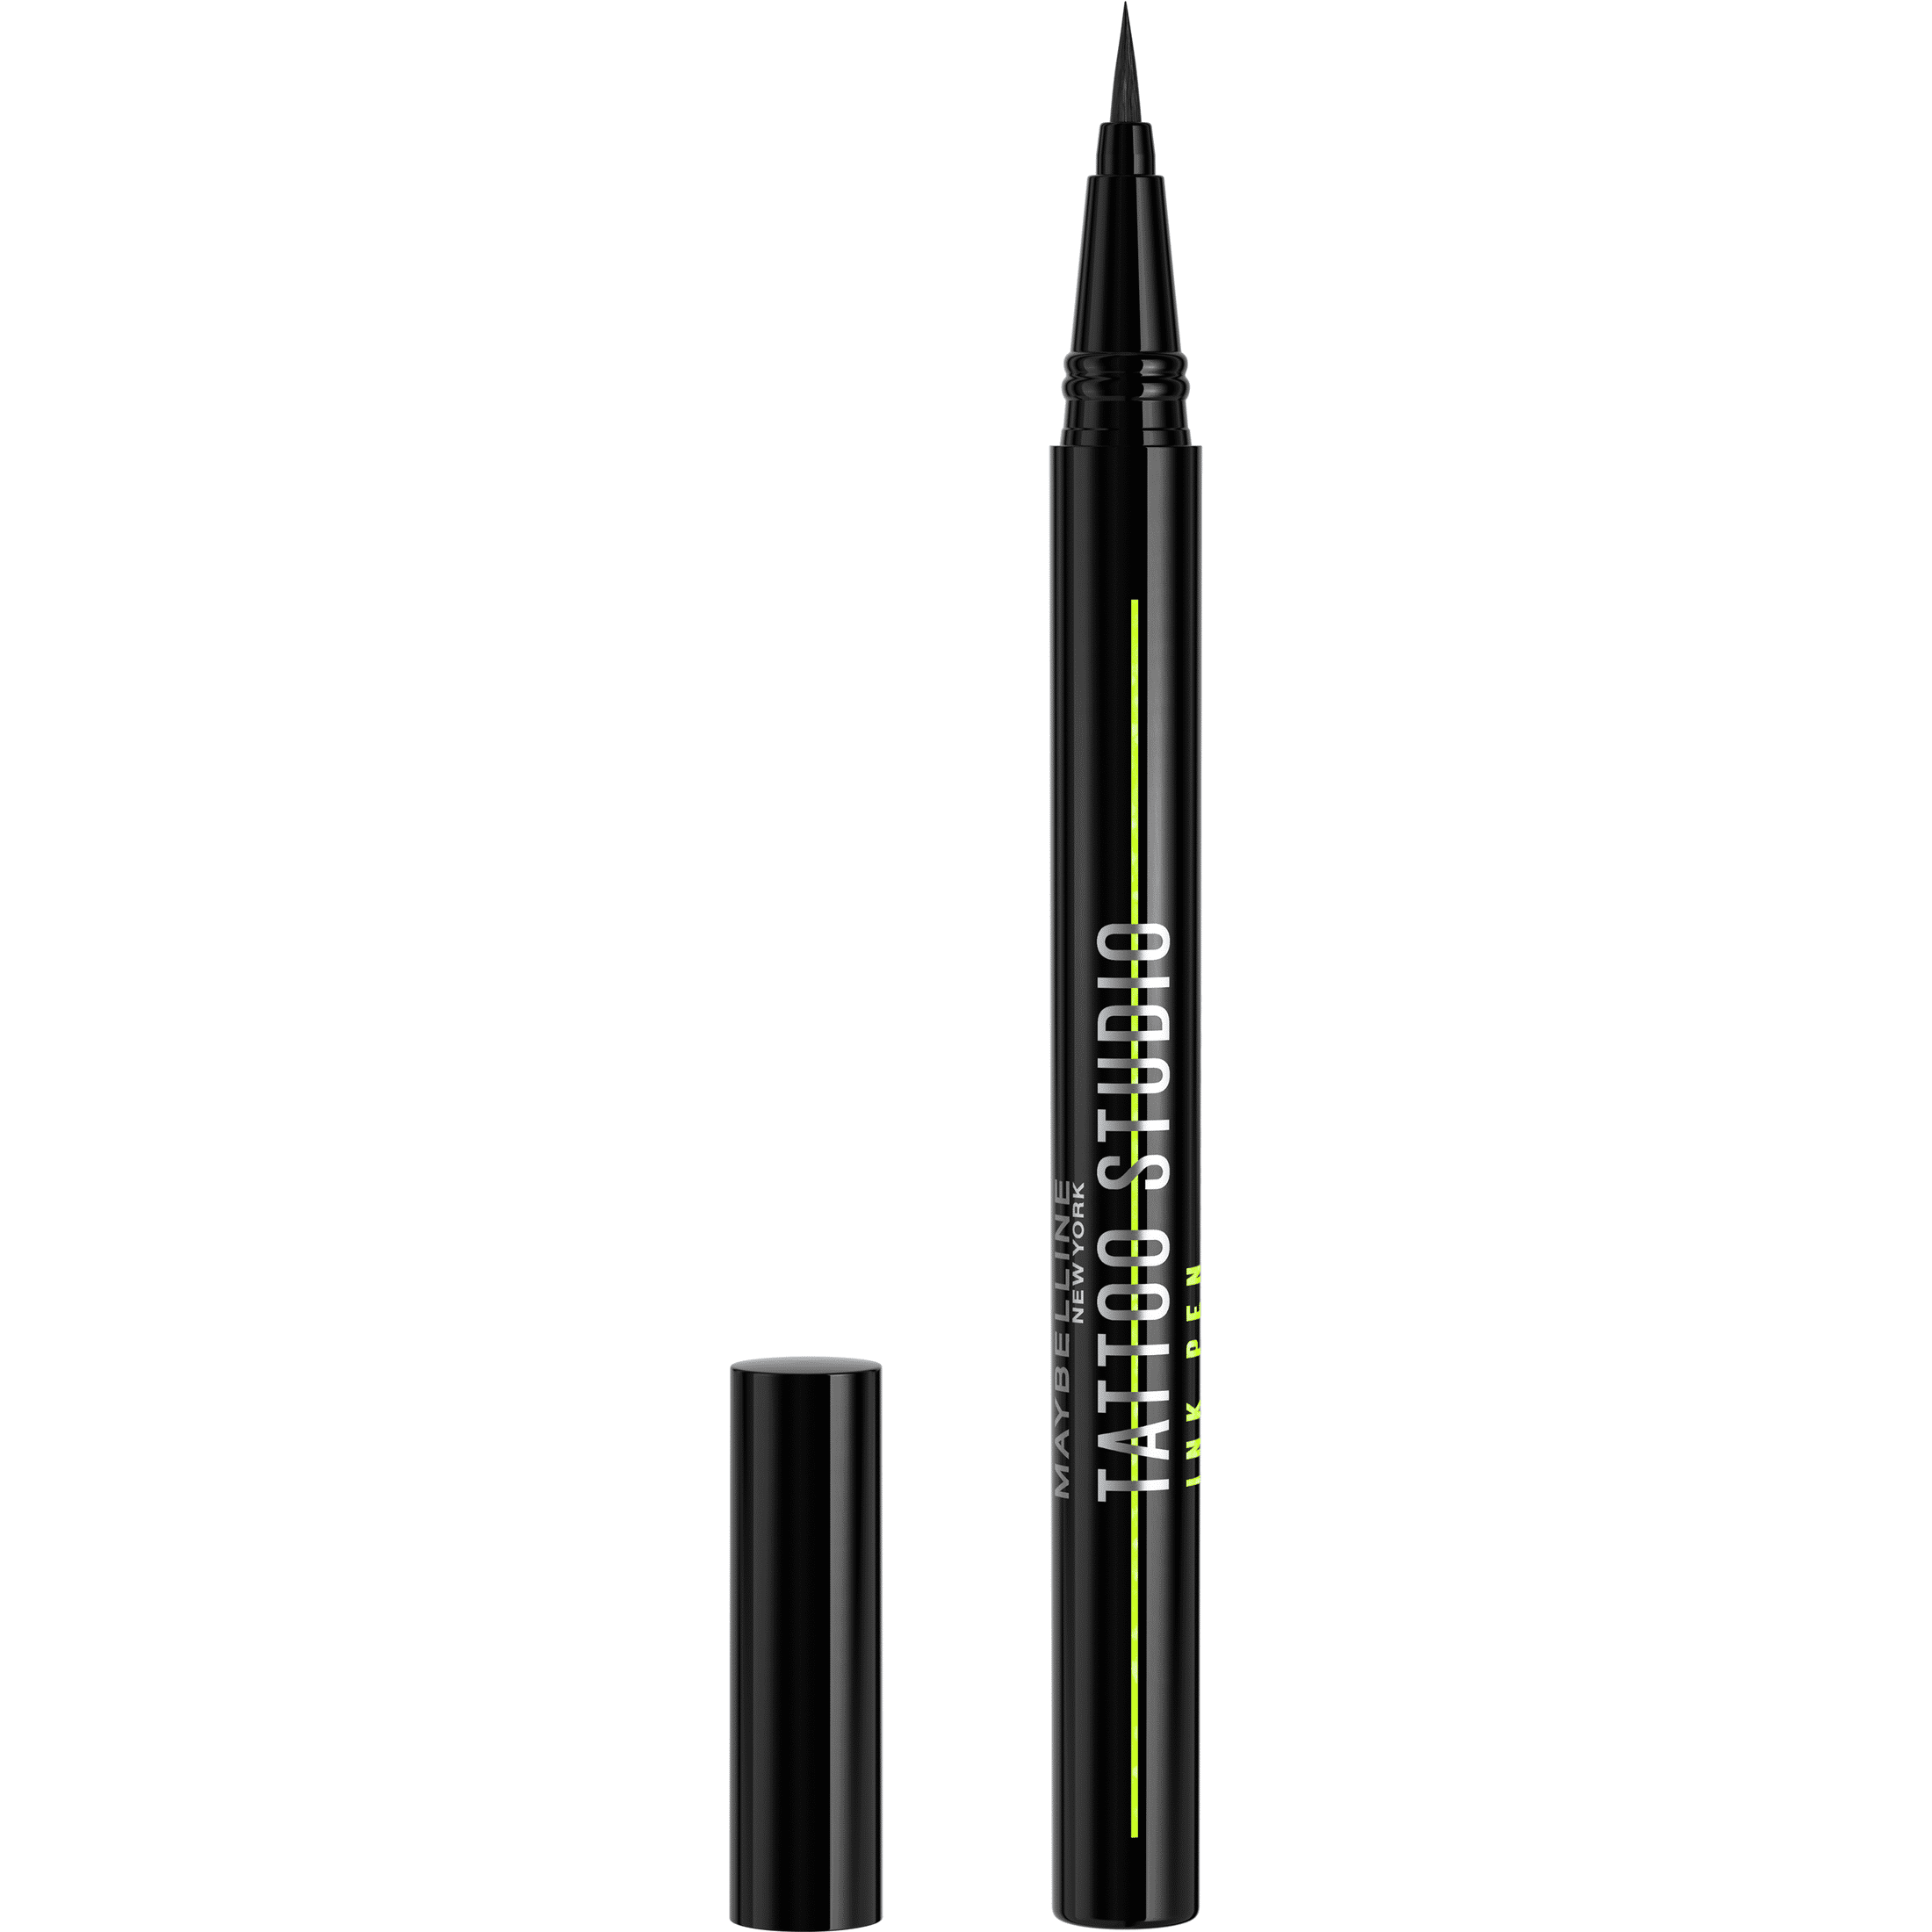 Sharpie Fine Tip Black Permanent Marker Pen - Sitaram Stationers